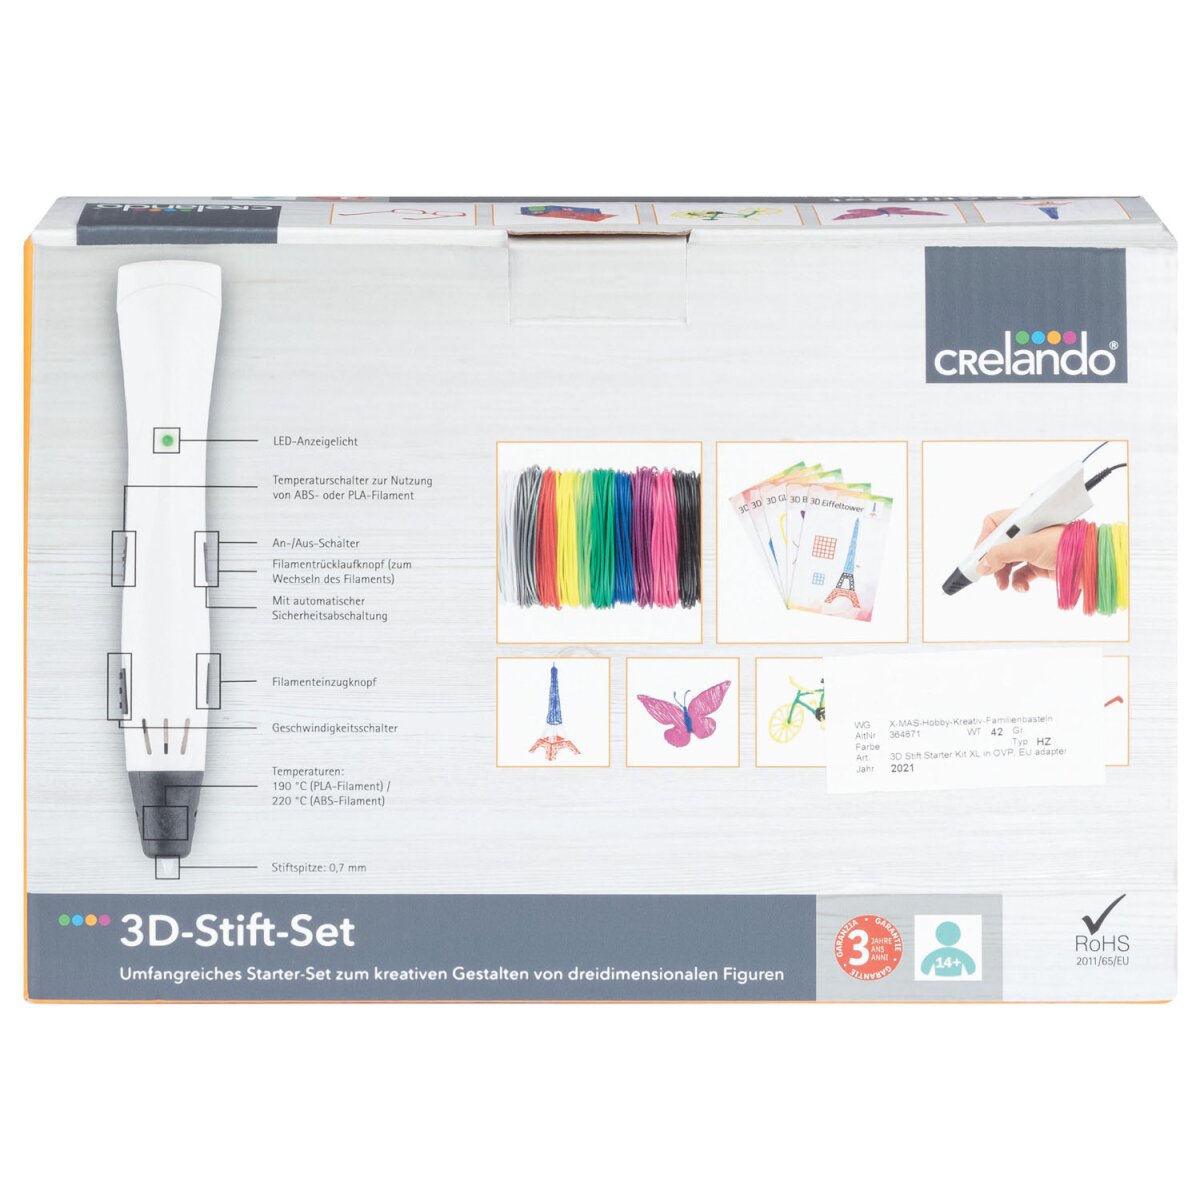 crelando® 3D Stift-Set, 19-teilig - B-Ware neuwertig, 22,99 €